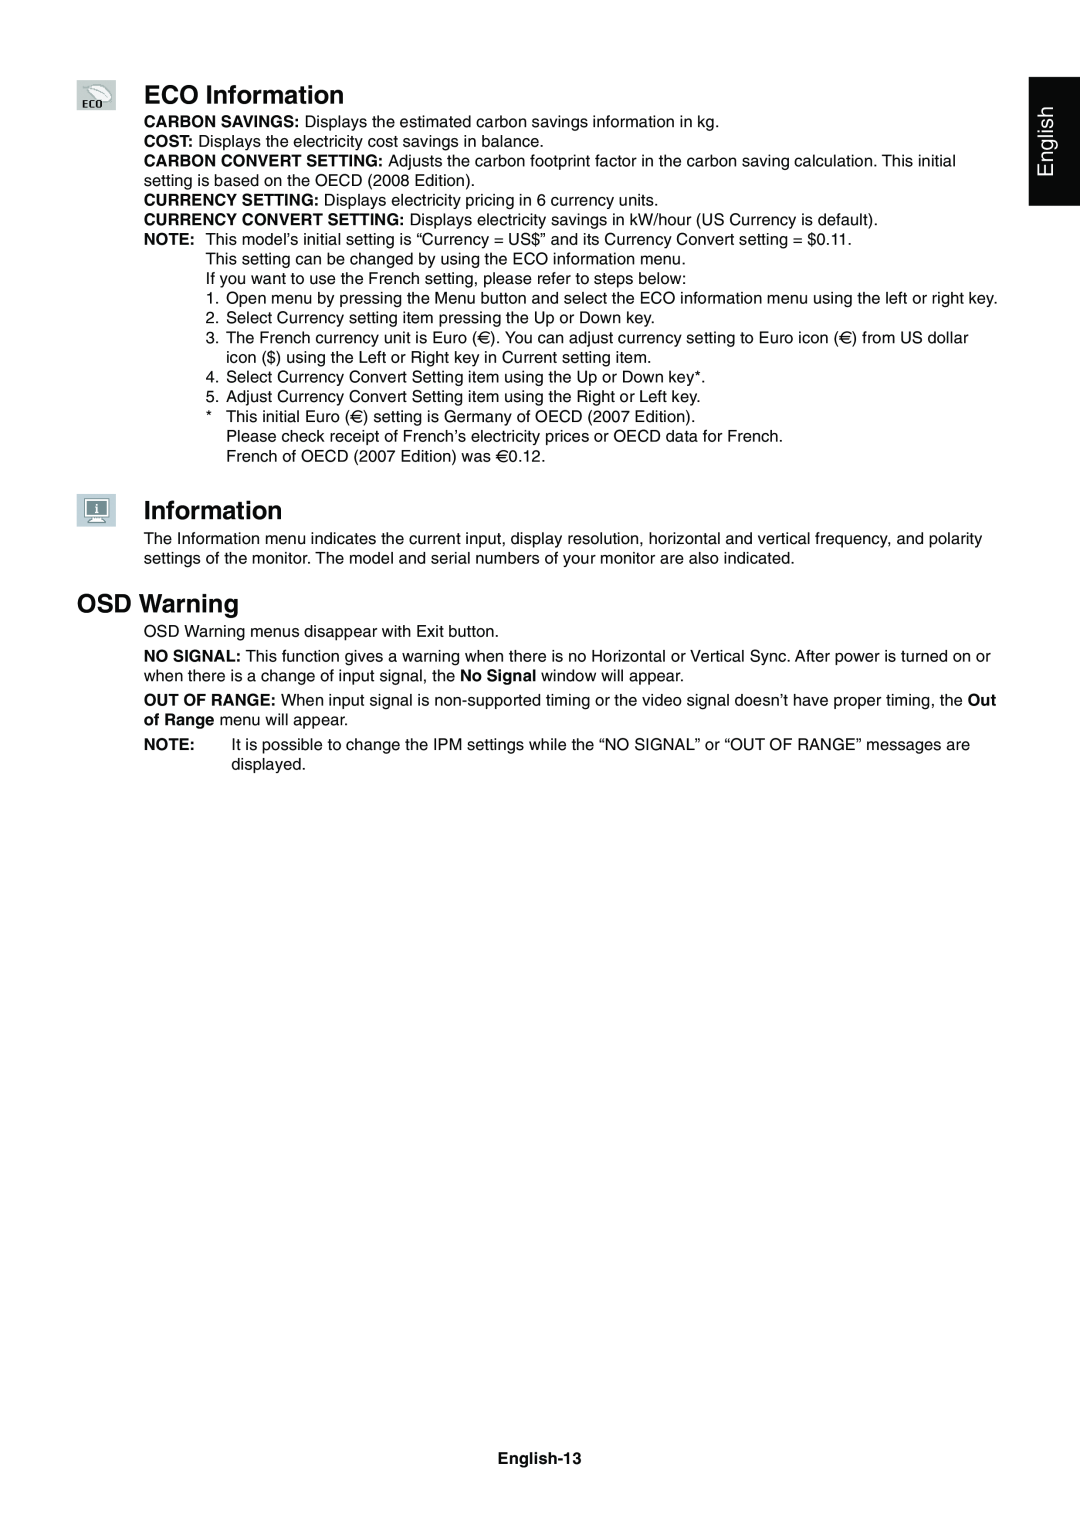 NEC E201W user manual ECO Information, OSD Warning, English-13 